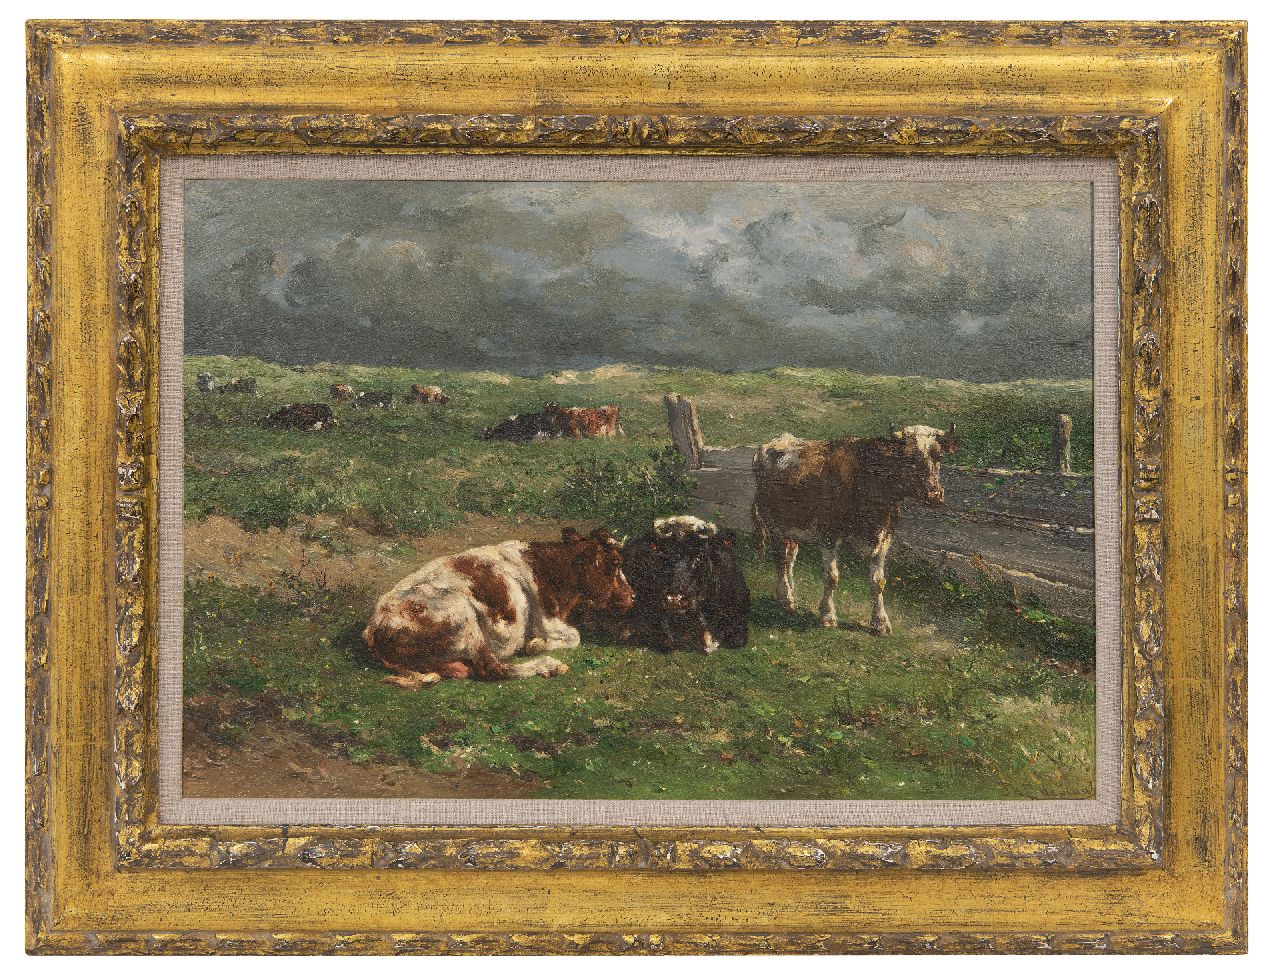 Haas J.H.L. de | Johannes Hubertus Leonardus de Haas | Paintings offered for sale | Resting cattle in a meadow, oil on panel 31.3 x 47.1 cm, signed l.r.